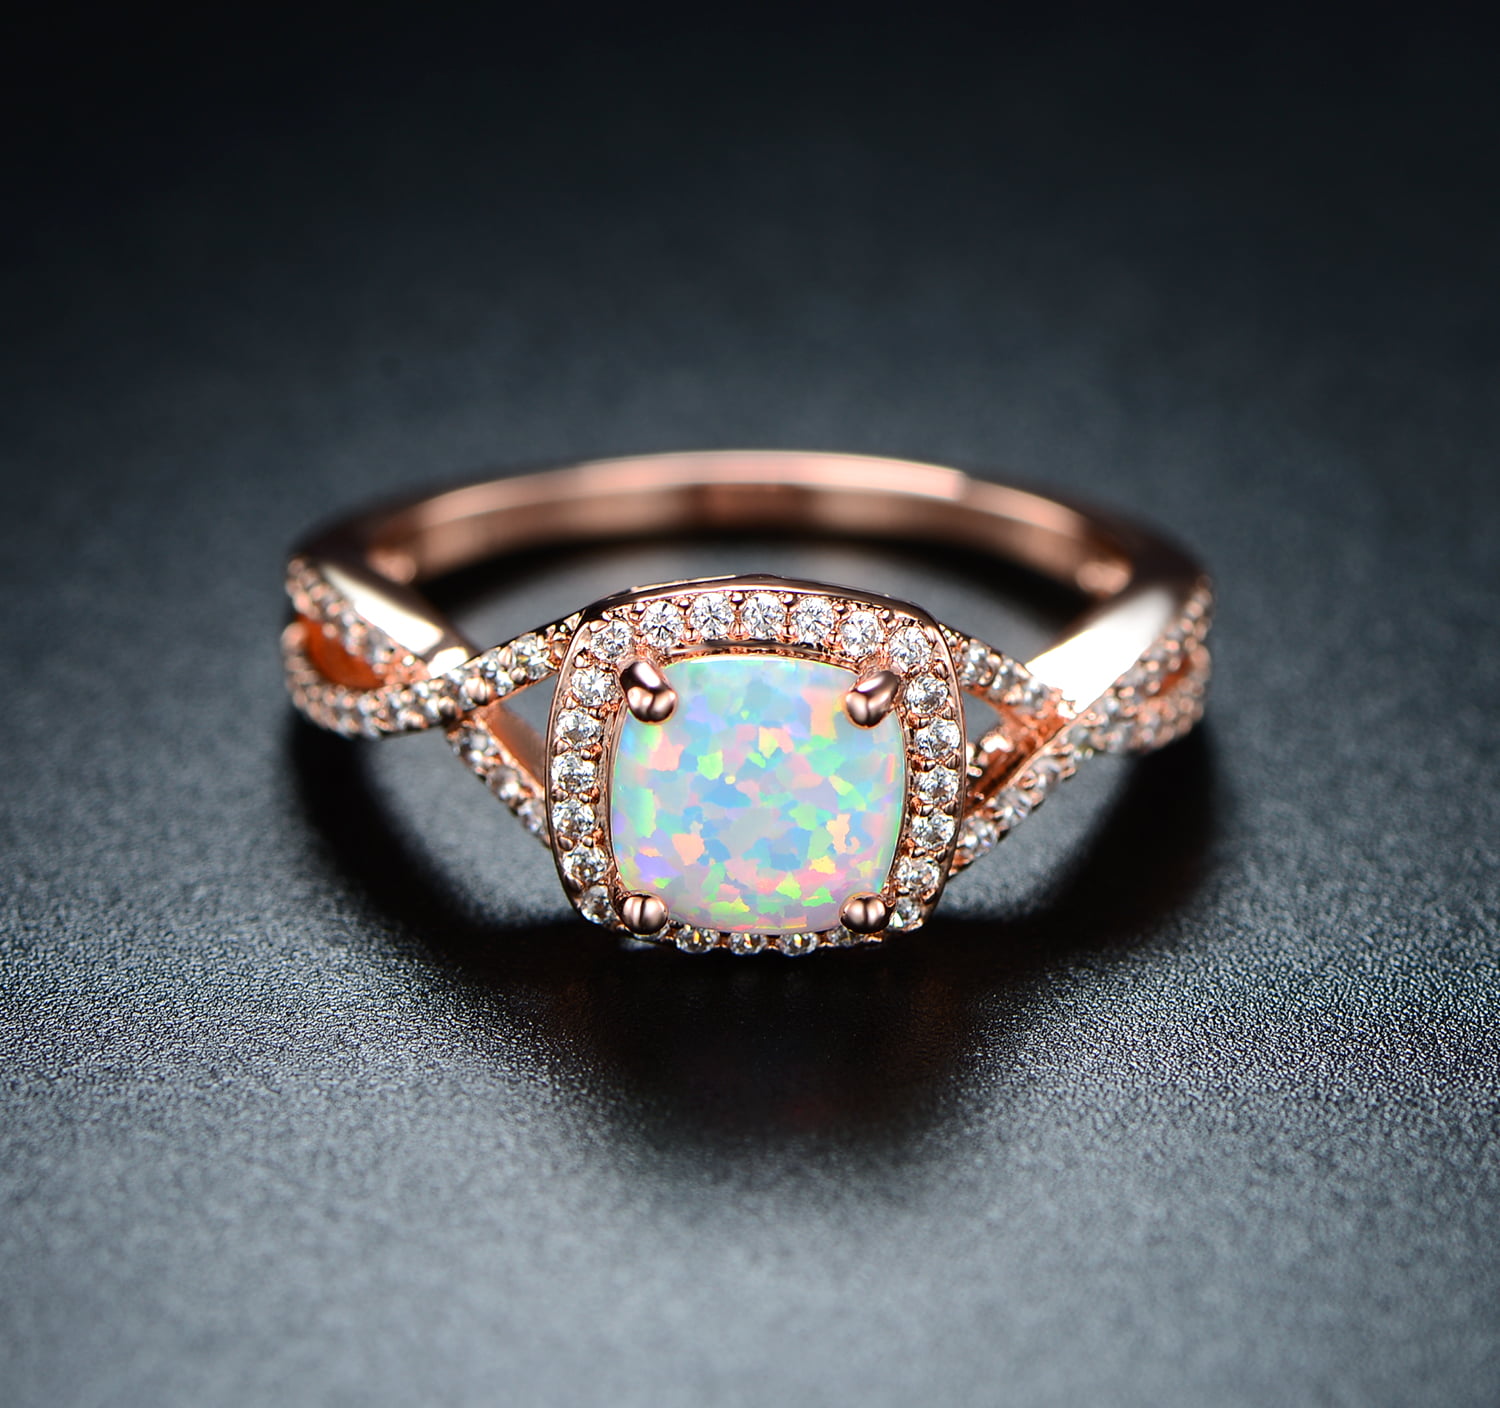 T&T Jewelry Orange Fire Opal Rings Fashion Overlay Jewelry For Women Wedding Rings 